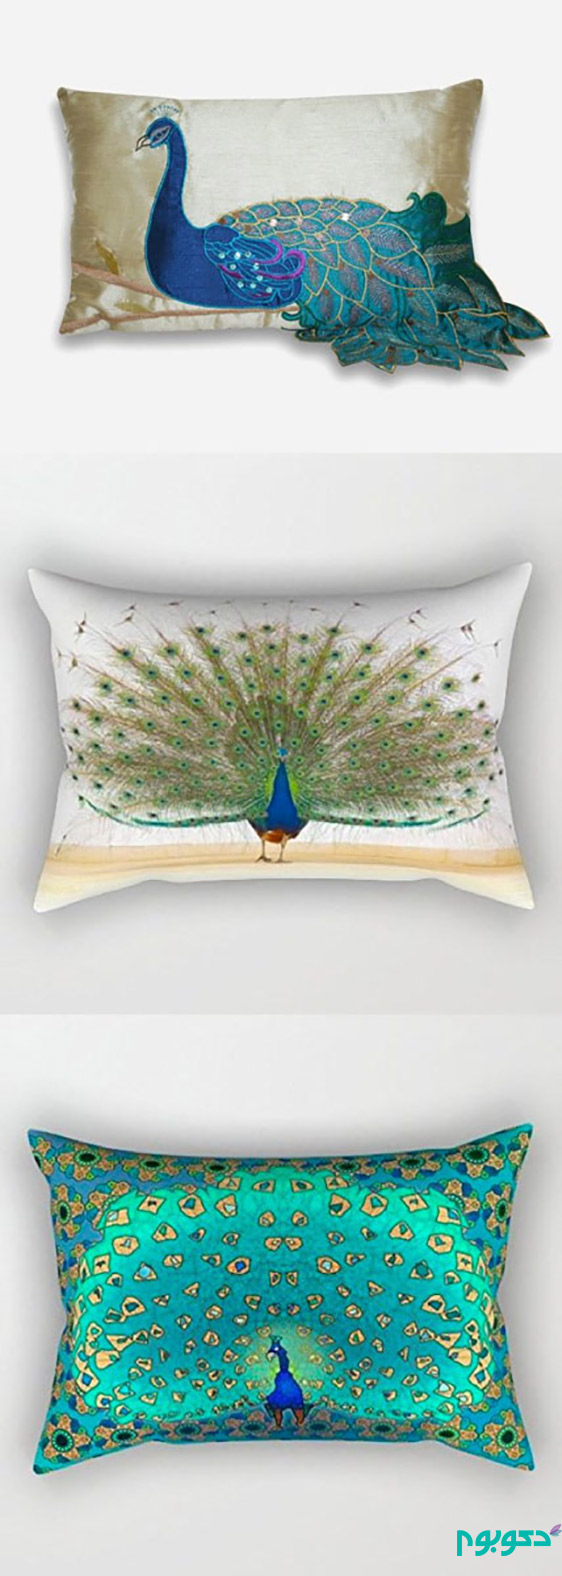 range-of-rectangular-cushions-peacock-themed-bedroom-600x1684.jpg